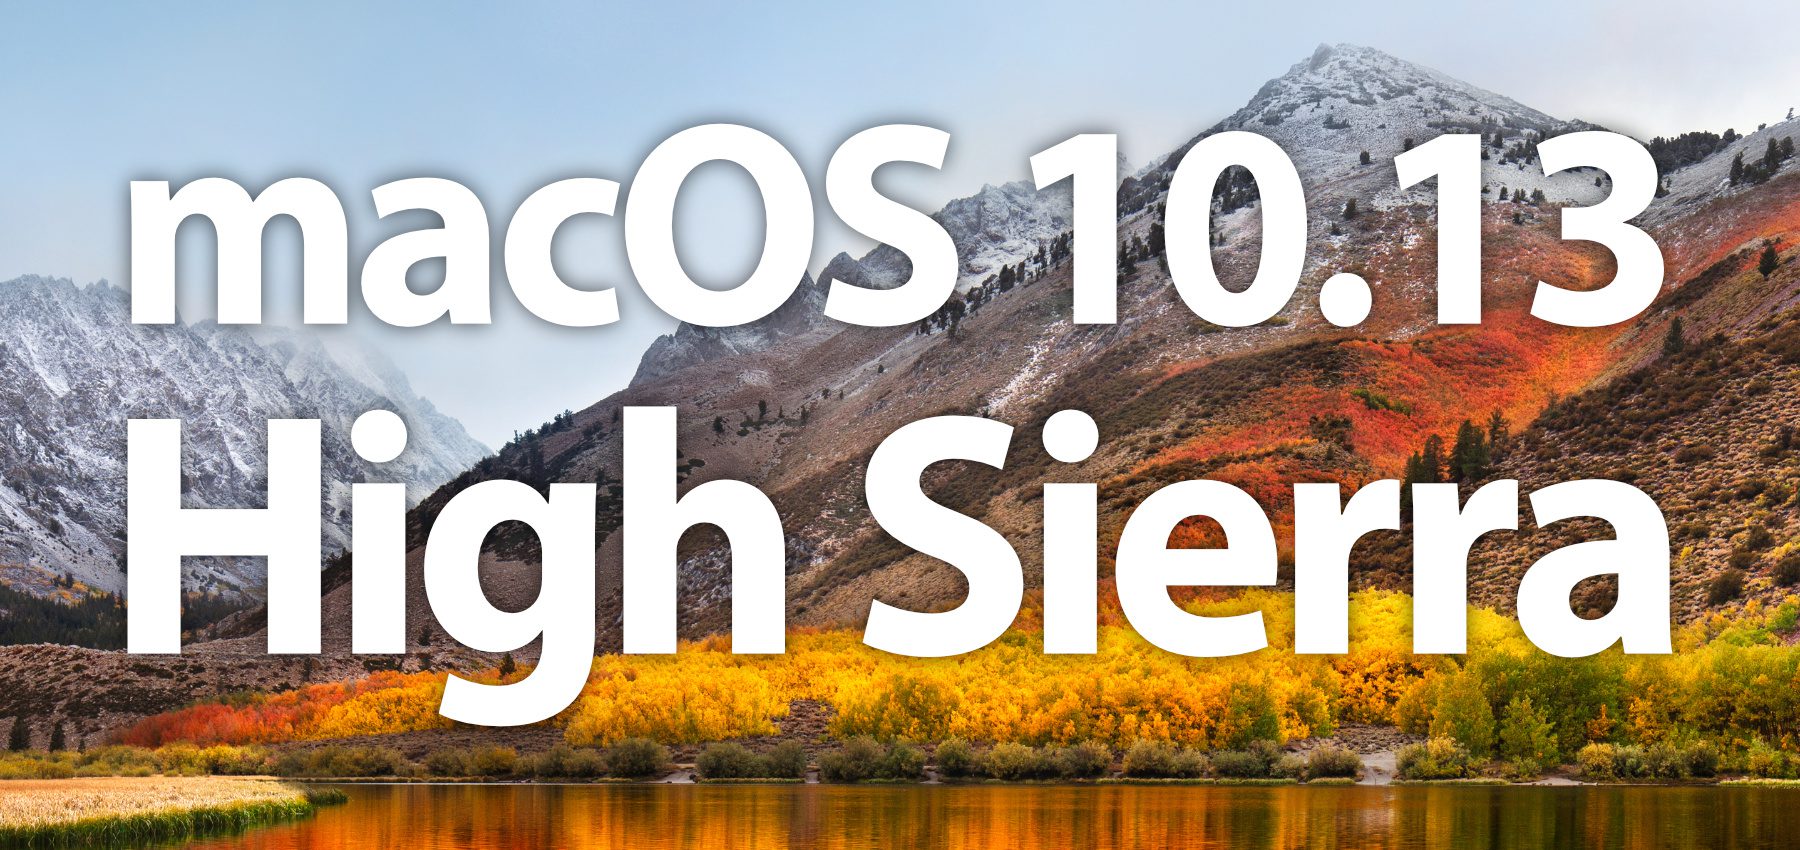 Mac os High Sierra. Mac os 10.13 High Sierra. Macos 10.13 high sierra